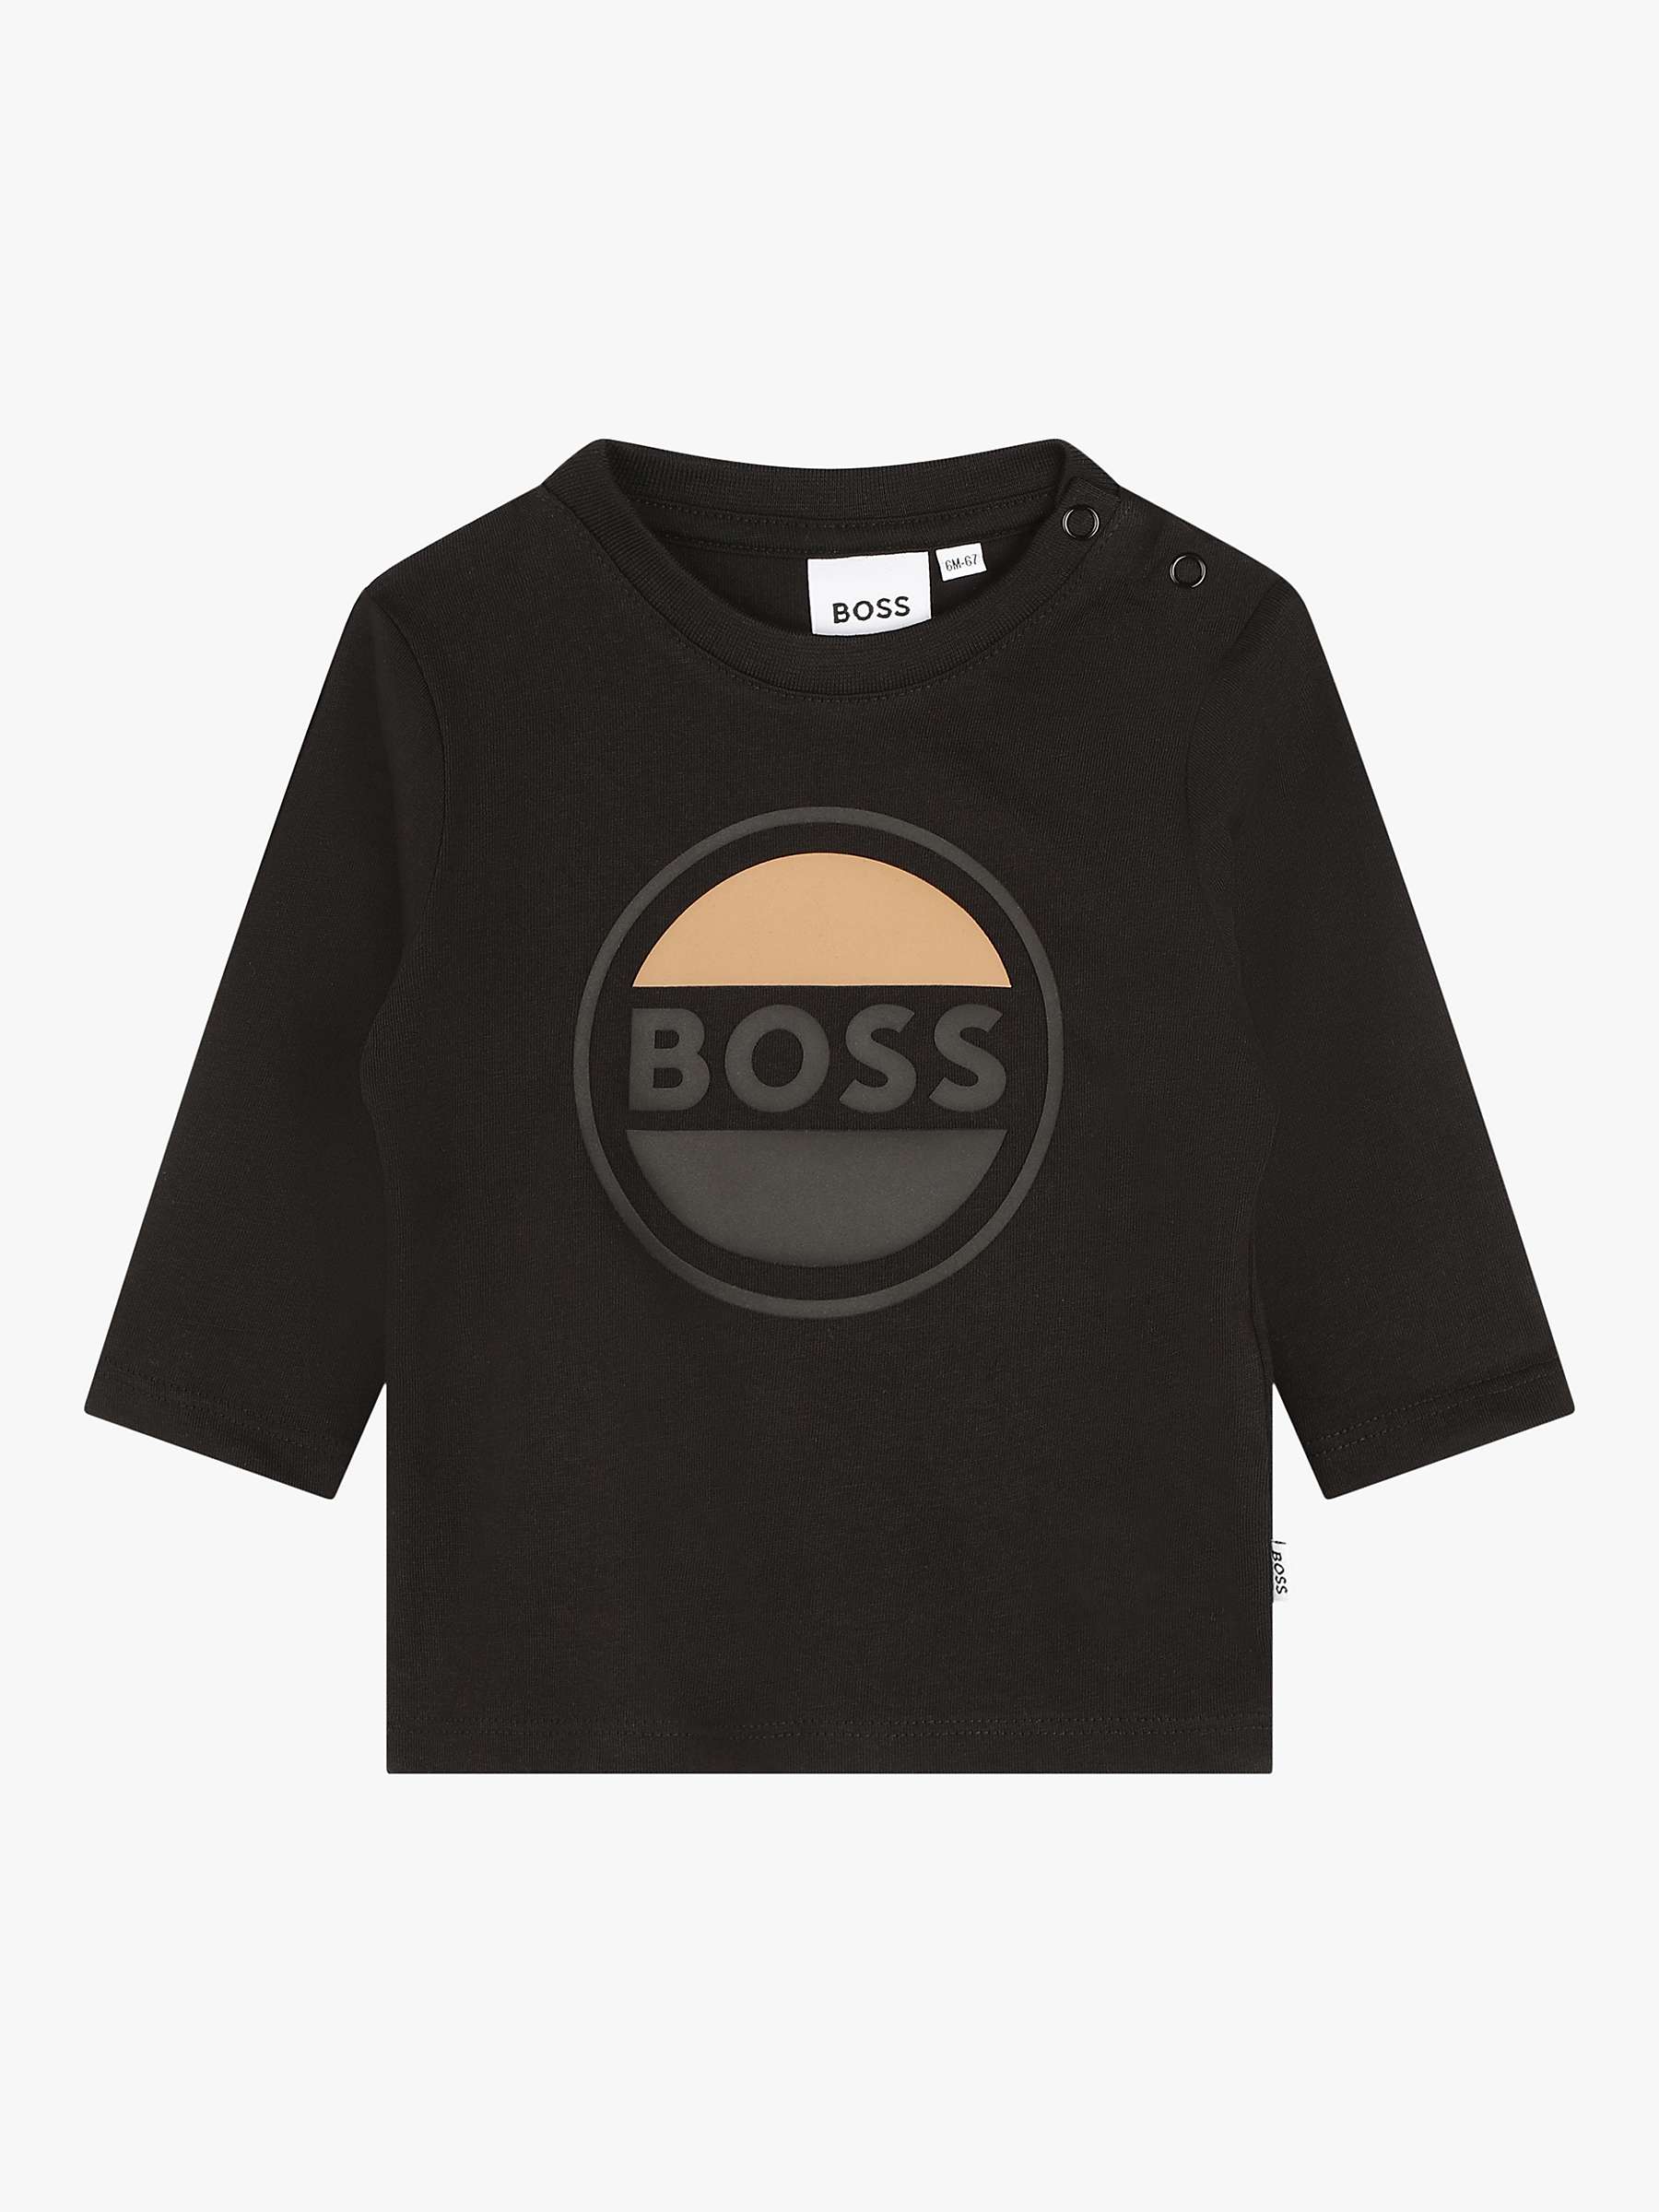 Buy BOSS Baby Logo Long Sleeve T-Shirt, Black/Multi Online at johnlewis.com